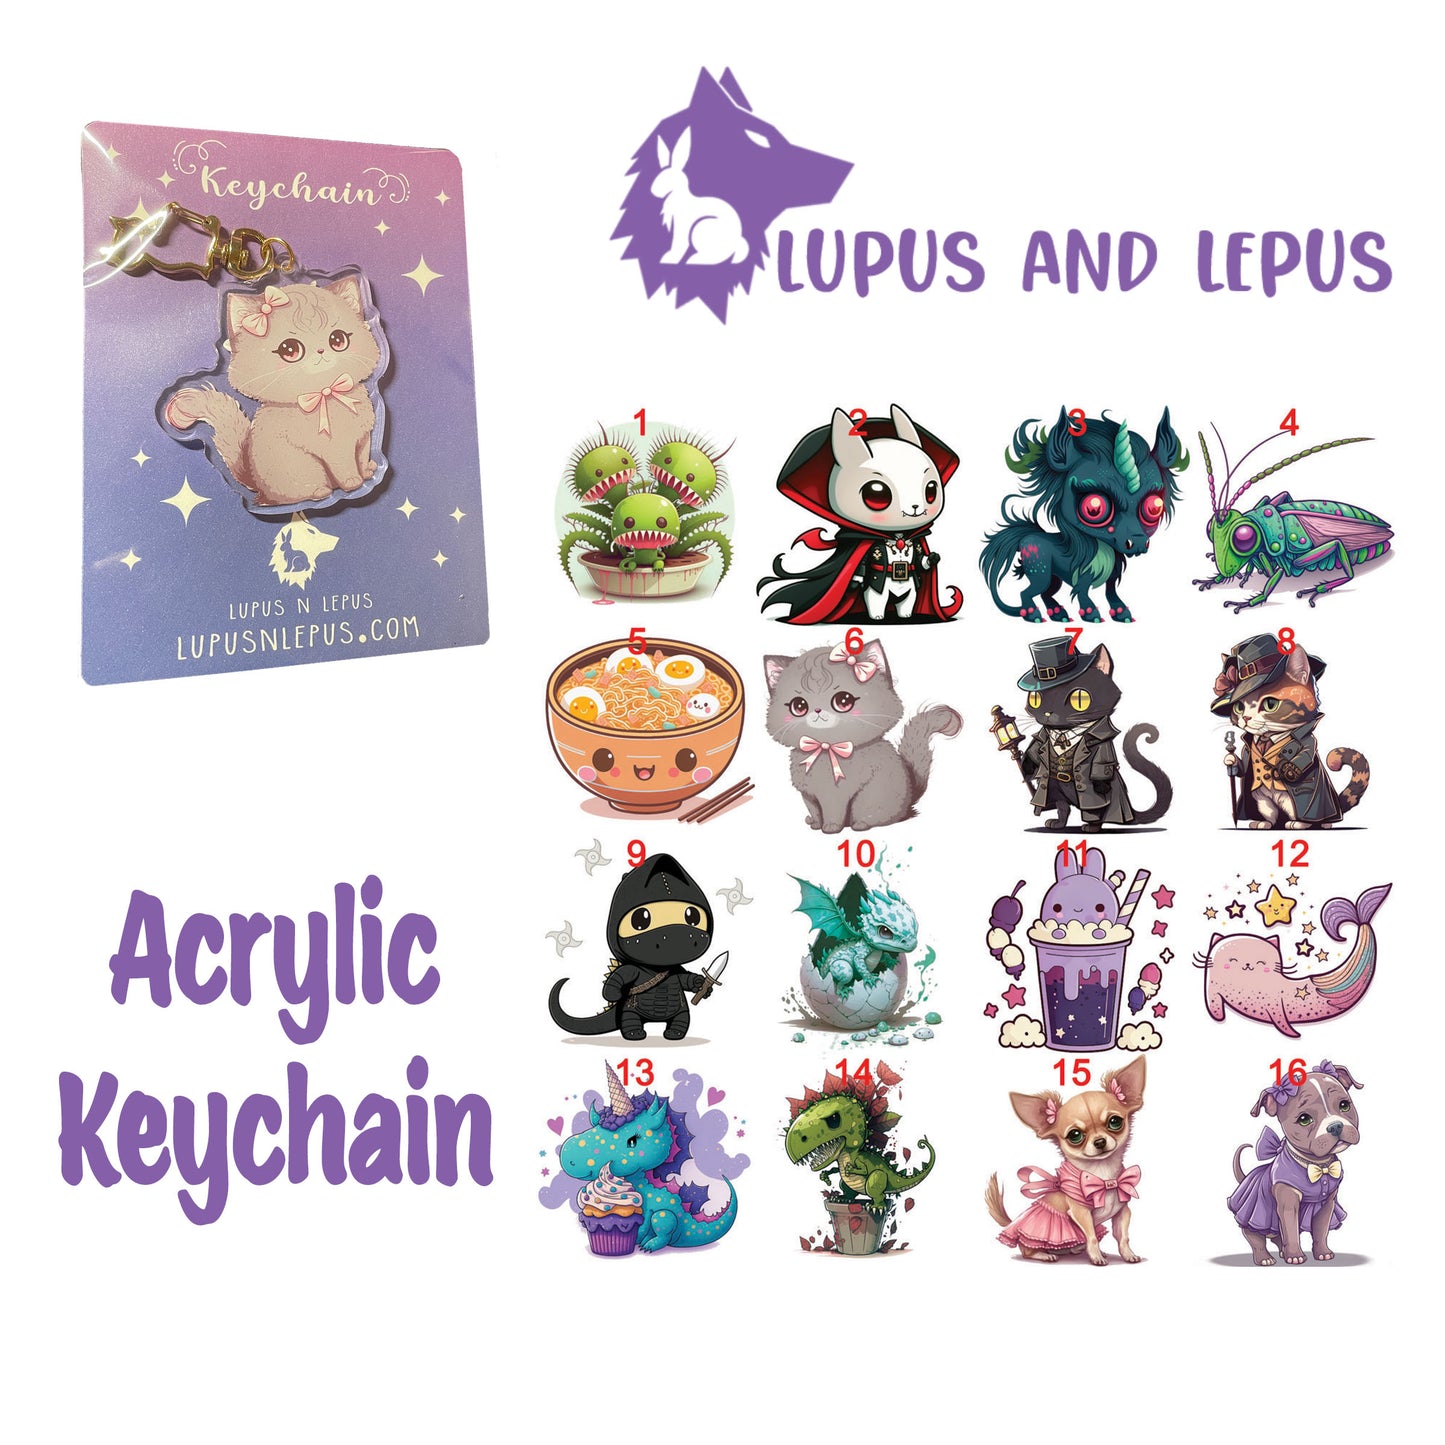 Acrylic Keychains 1 - My Art in the form of keychains, dragons, colorful, bunnies, faries, fairy, faery, magic, mythical, bear, giraffe, wearwolf, lizard, dinosaur,